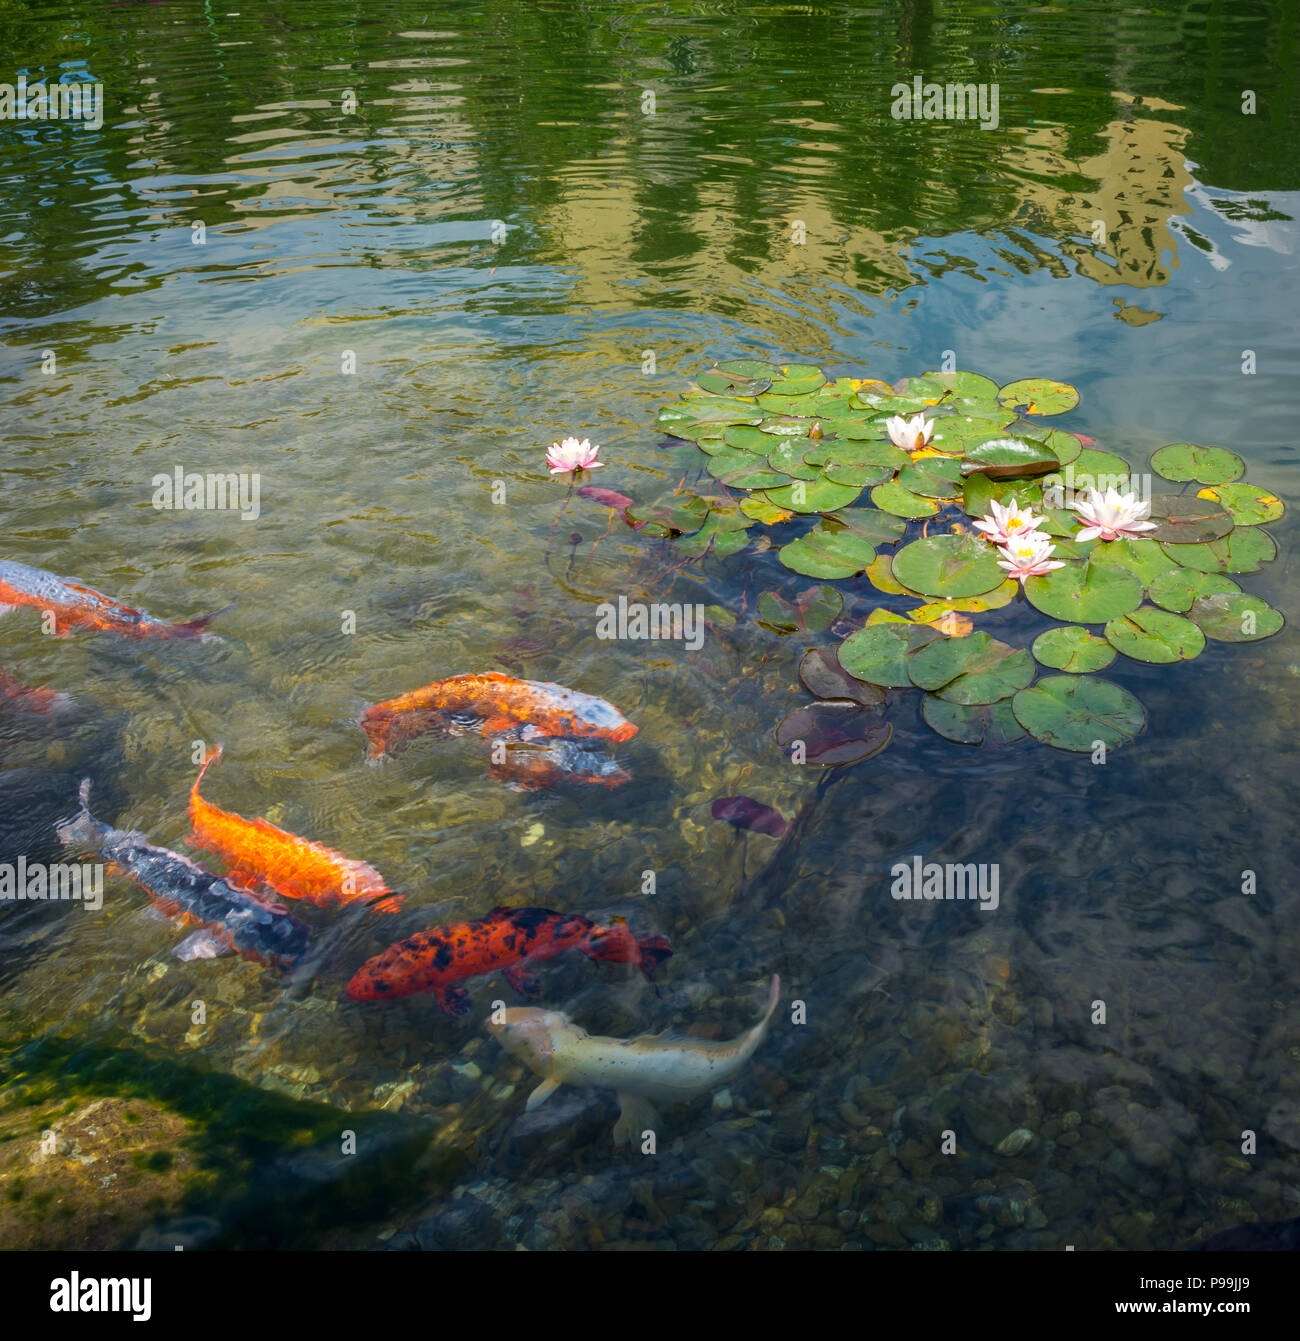 Gruppo di karpa ornamentali pesci koi e ninfee nel parco. Water Lilies. (Nymphaeaceae) Foto Stock